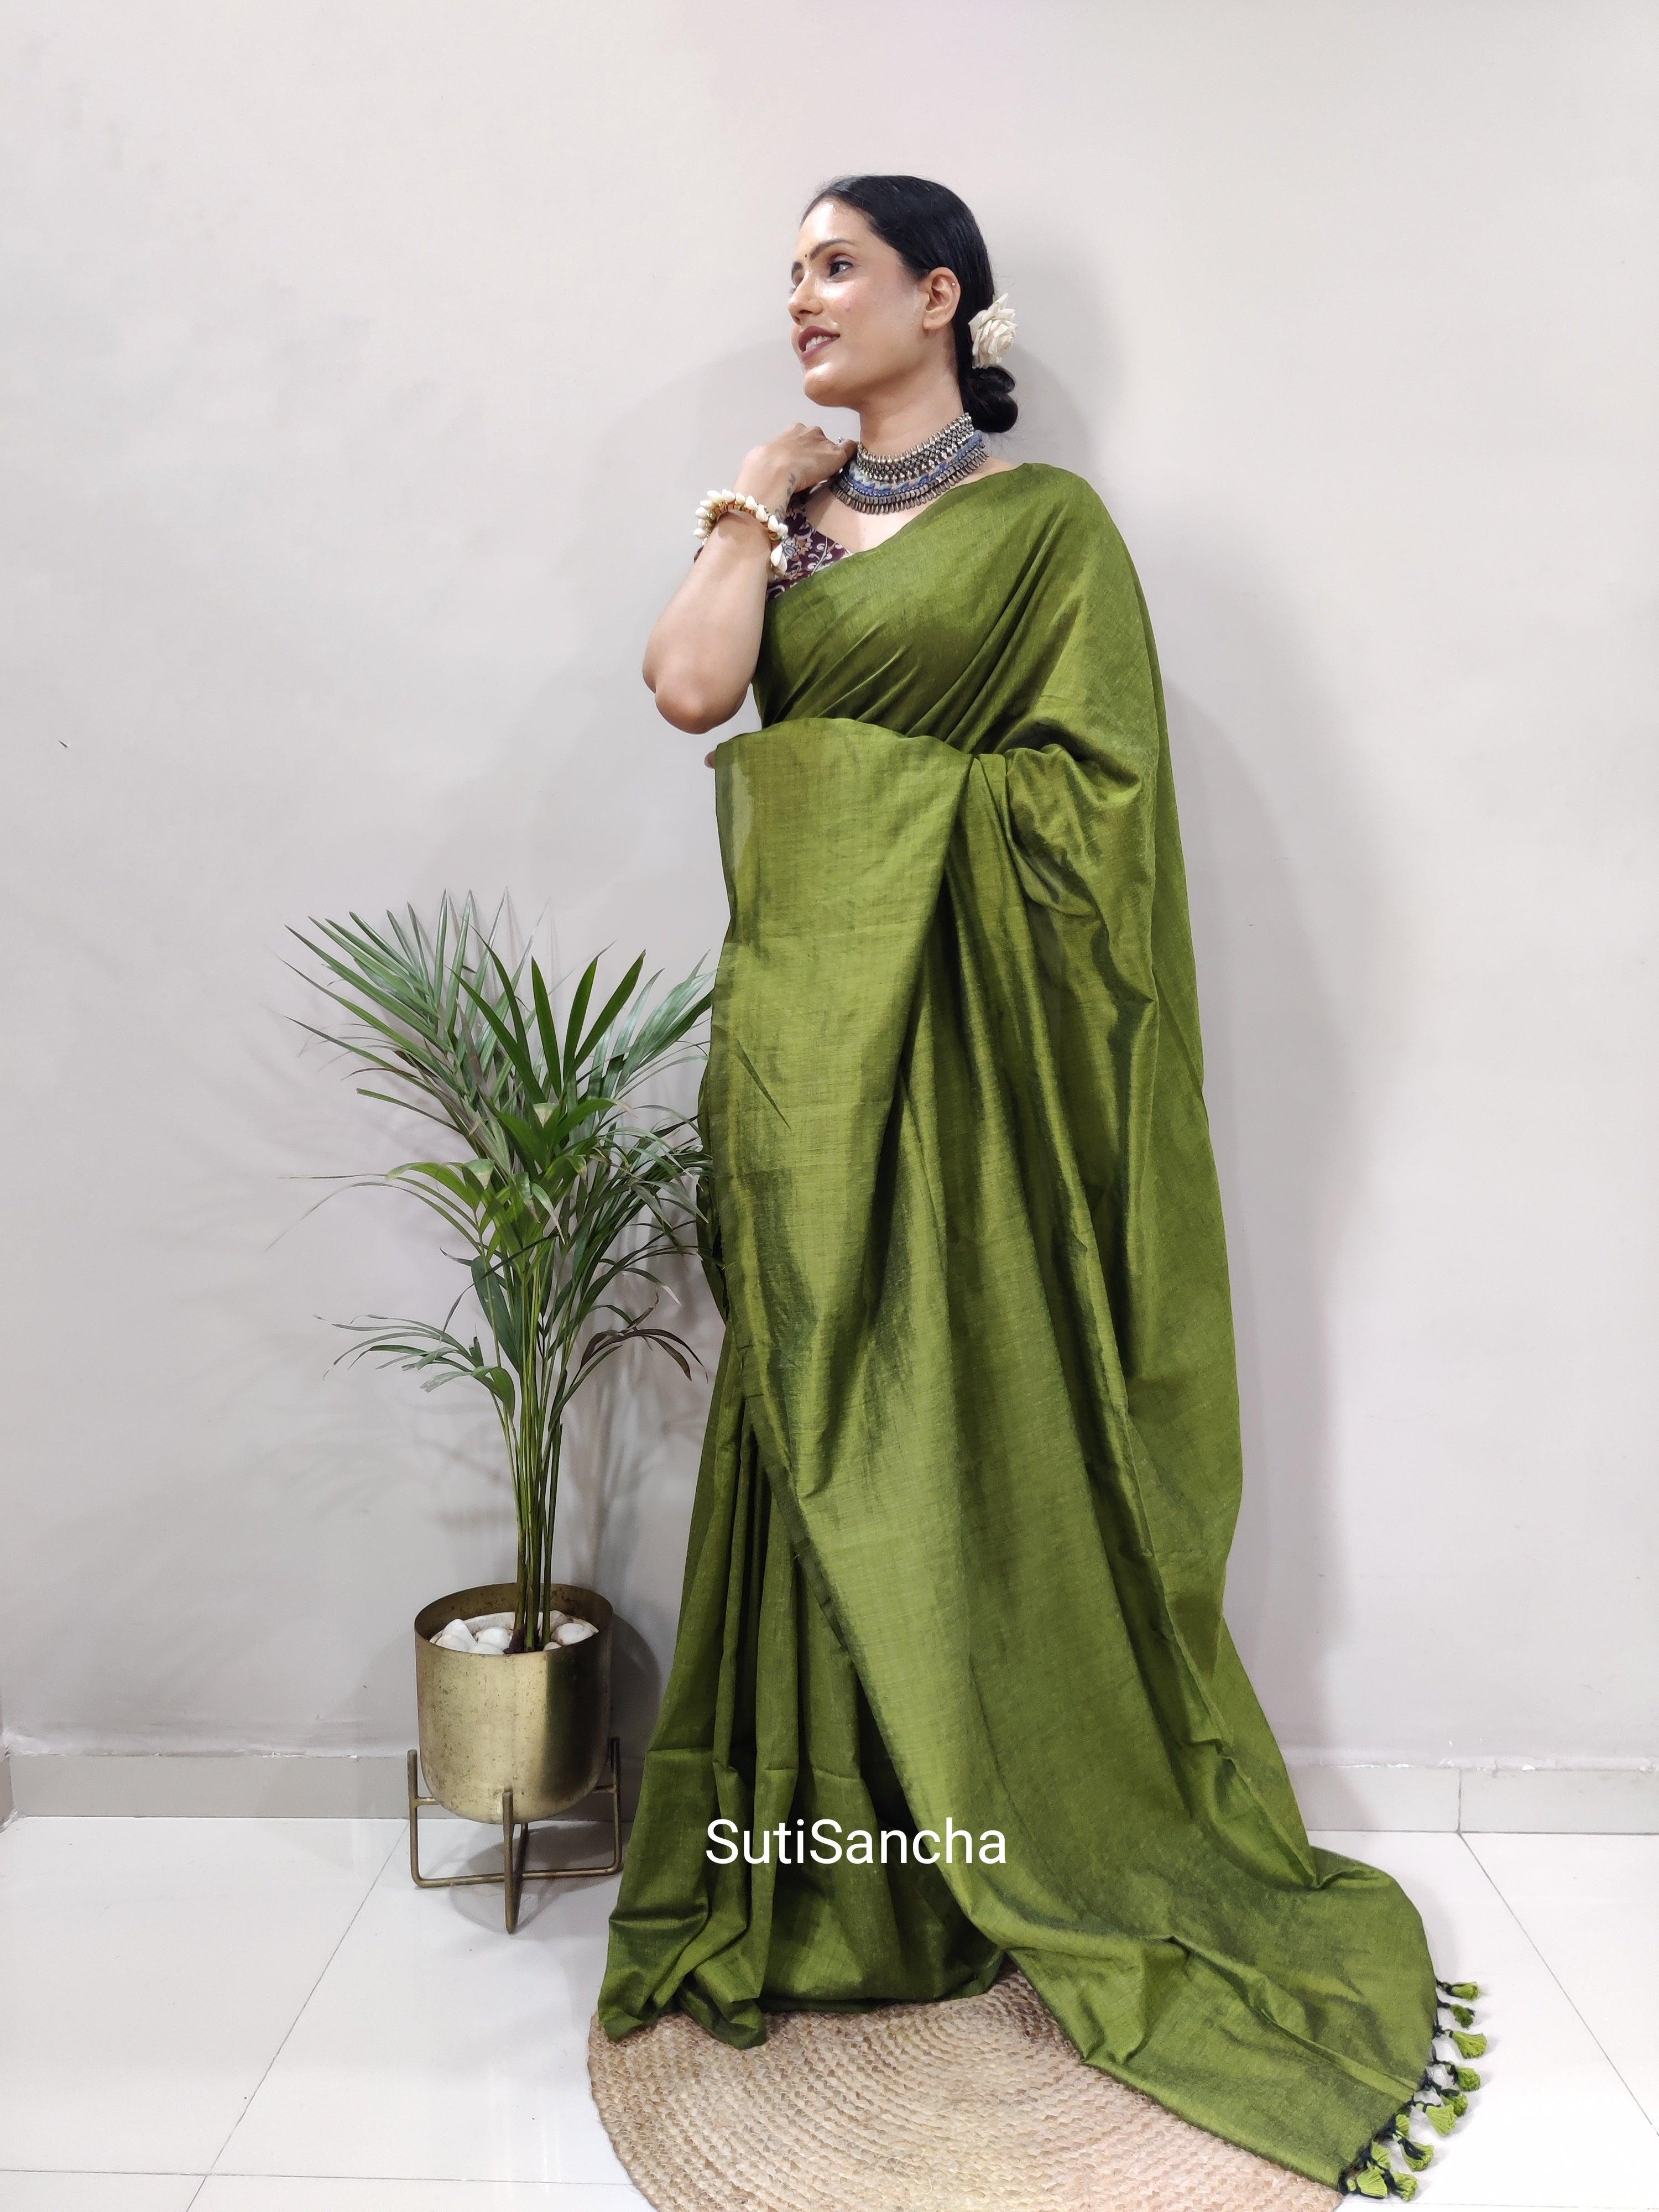 Sutisancha Mehndi Khadi Saree & designer Blouse - Suti Sancha